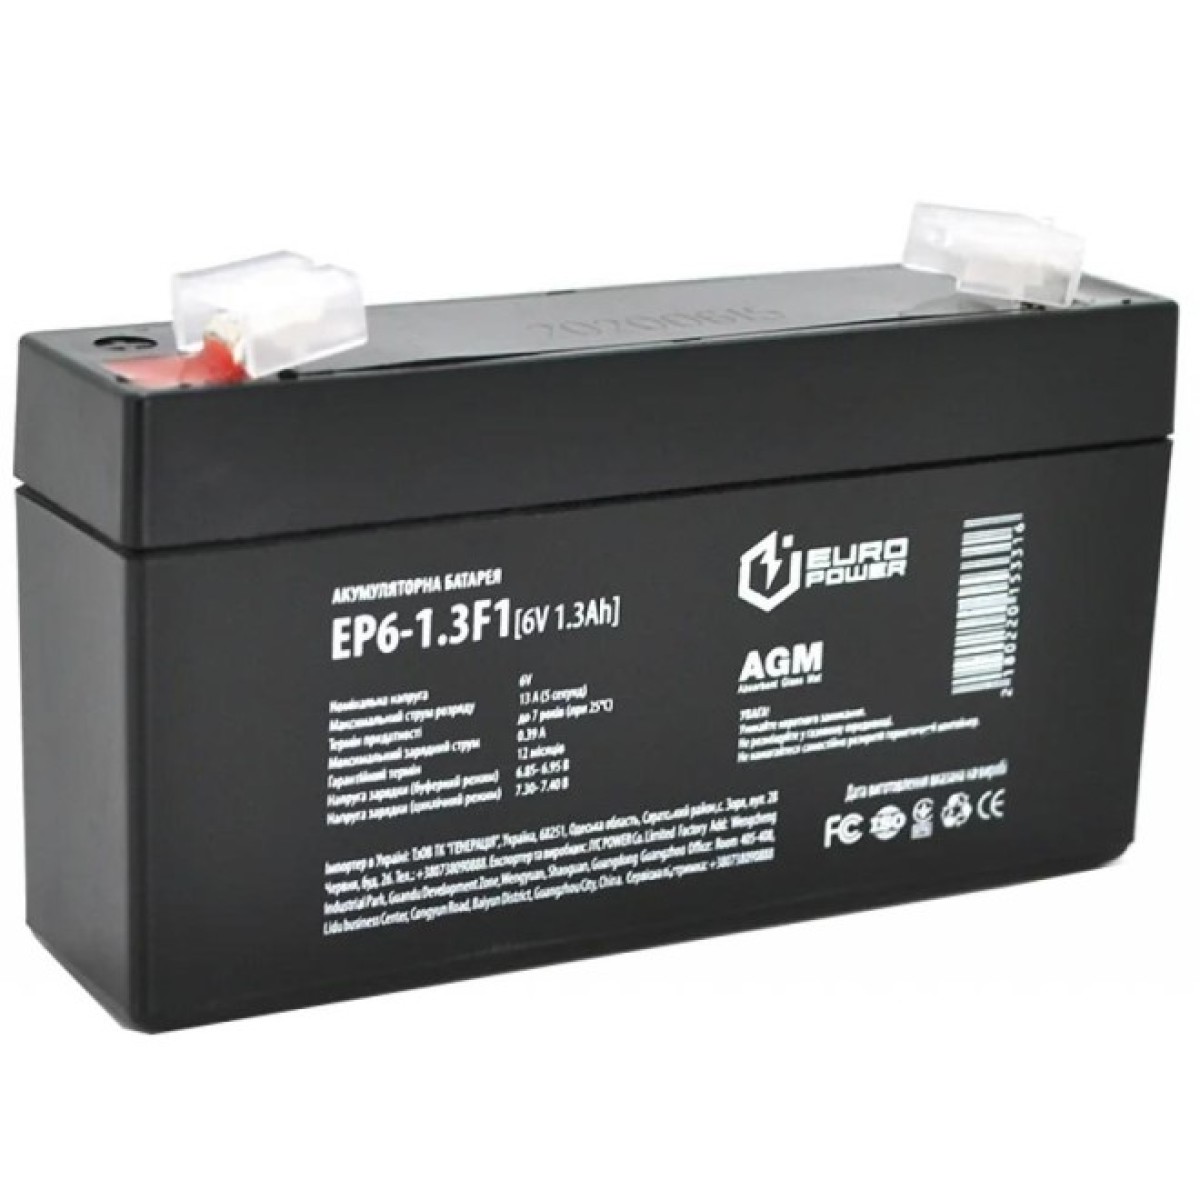 Батарея к ИБП Europower EP6-1.3F1, 6V-1.3Ah (EP6-1.3F1) 256_256.jpg